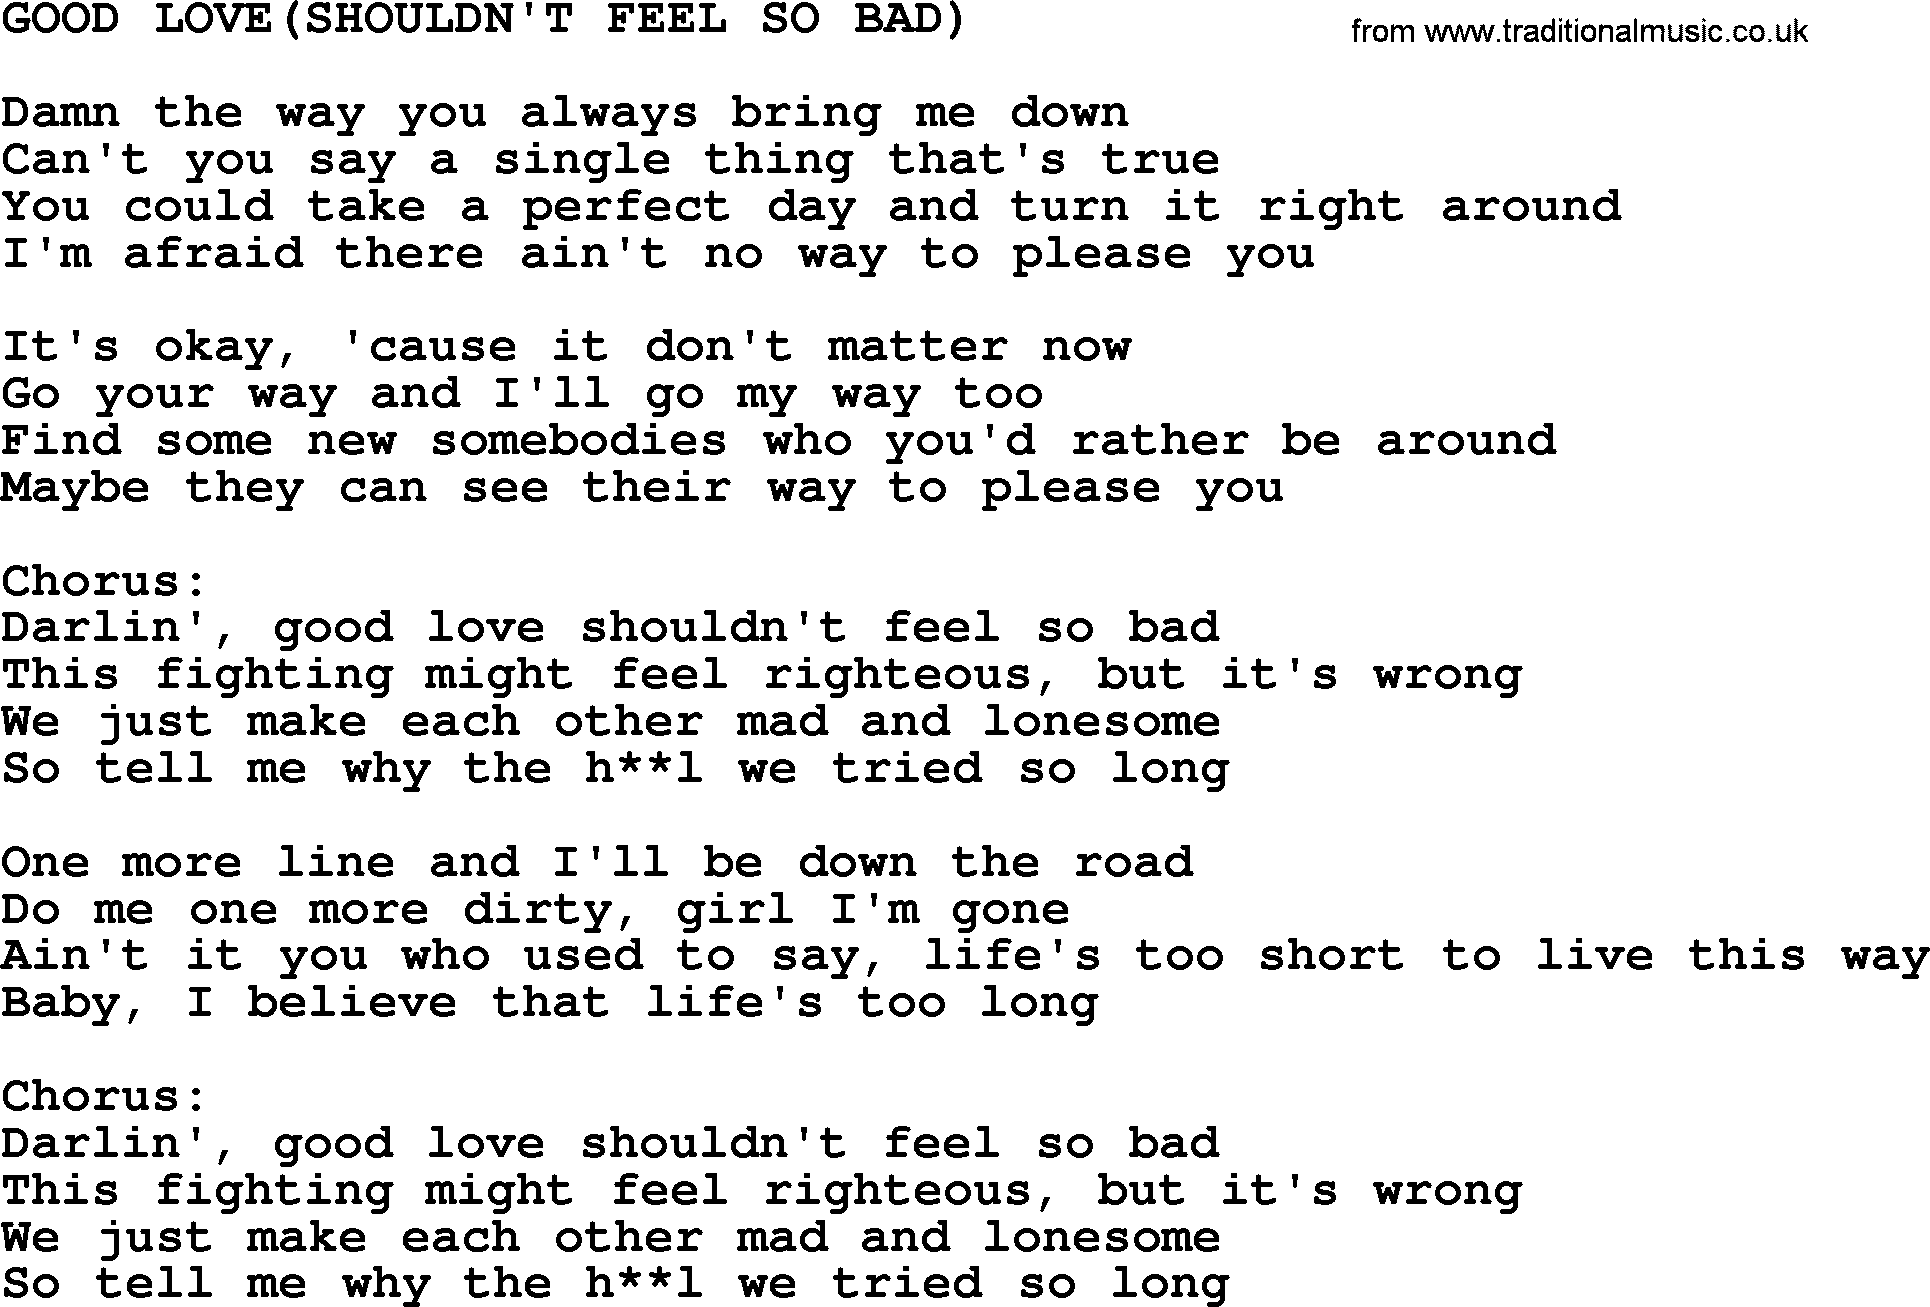 Kris Kristofferson song: Good Love(shouldn't Feel So Bad) lyrics